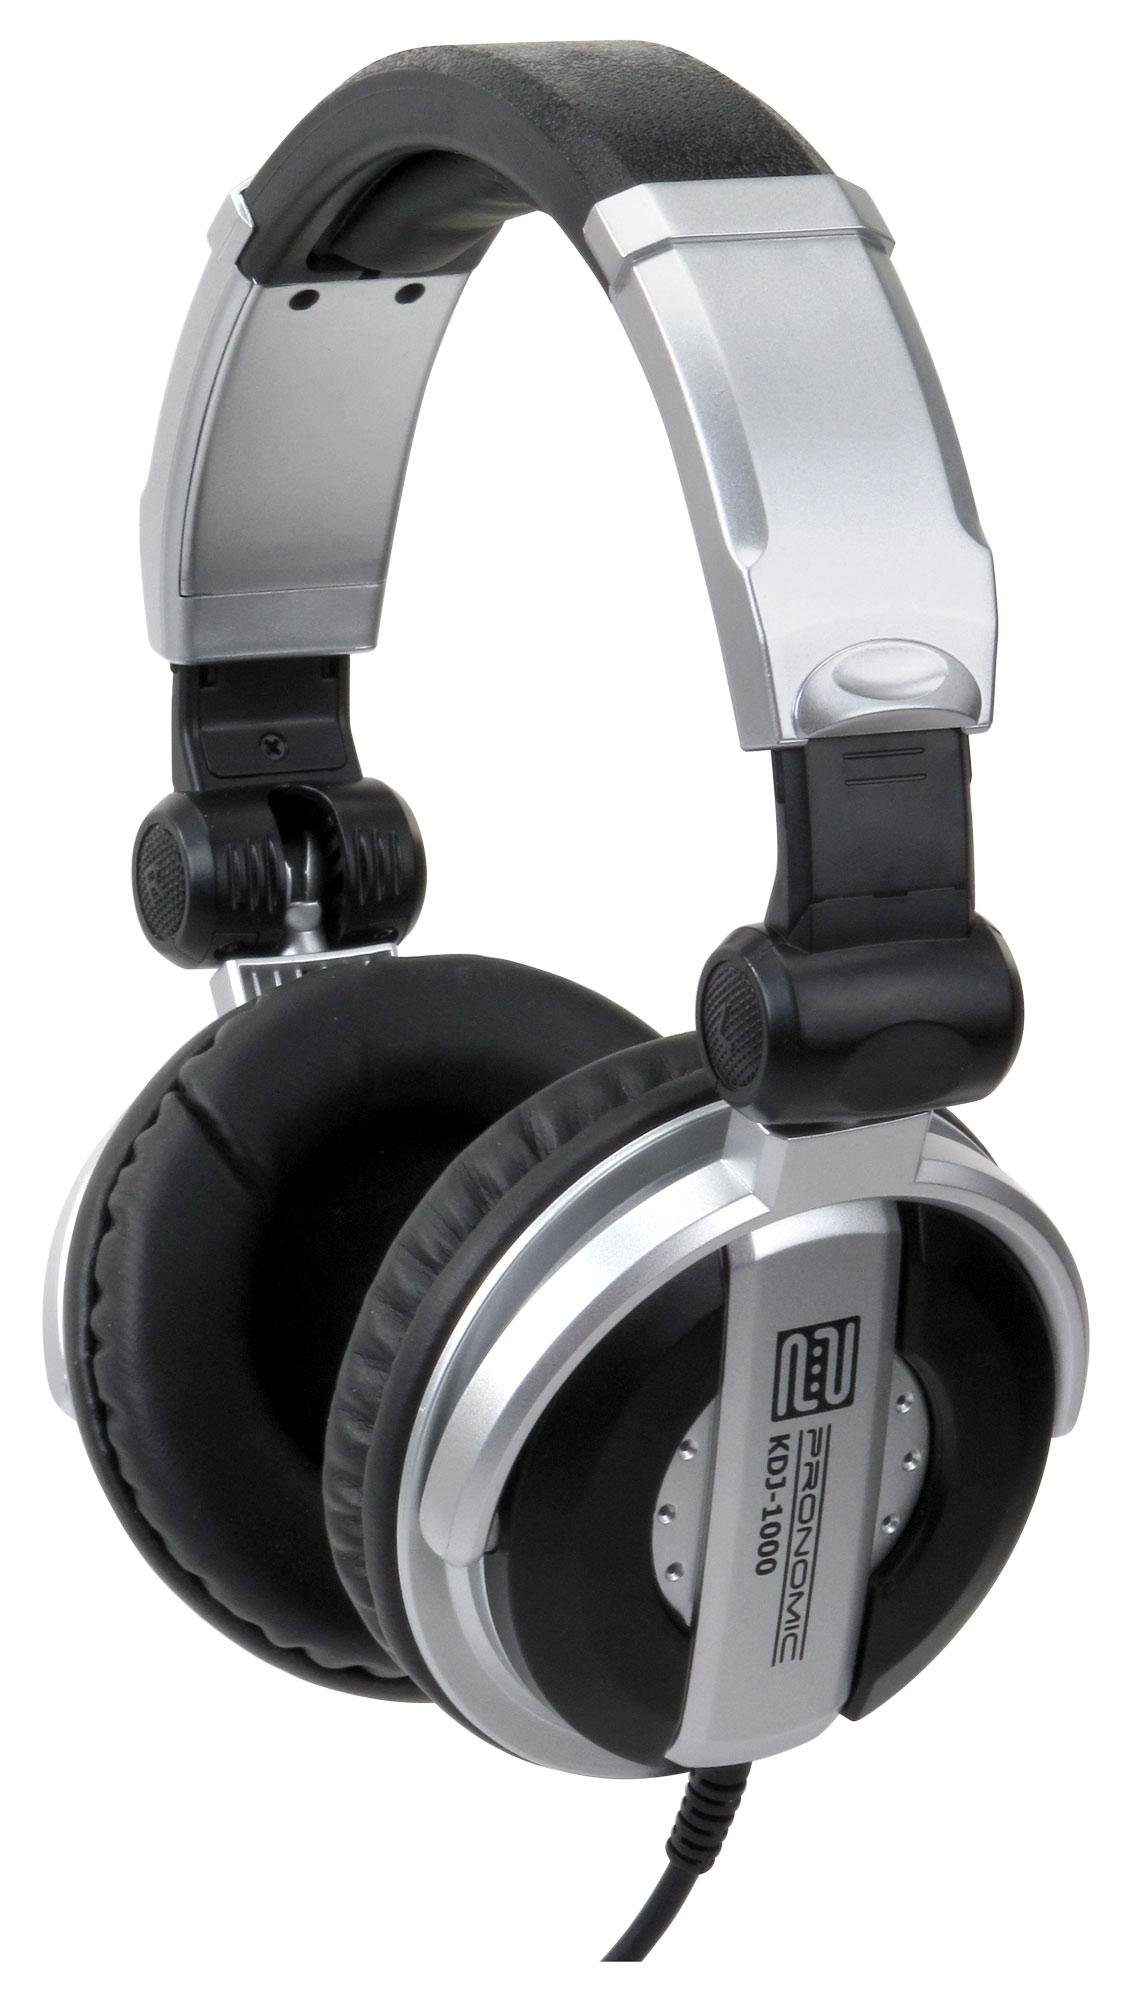 Pronomic KDJ-1000 DJ навушники (Außenschallisolierung dynamischer Навушники, 107 db SPL, 3,5 m Kabel, verstellbarer Kopfbügel, inkl. Adapter)